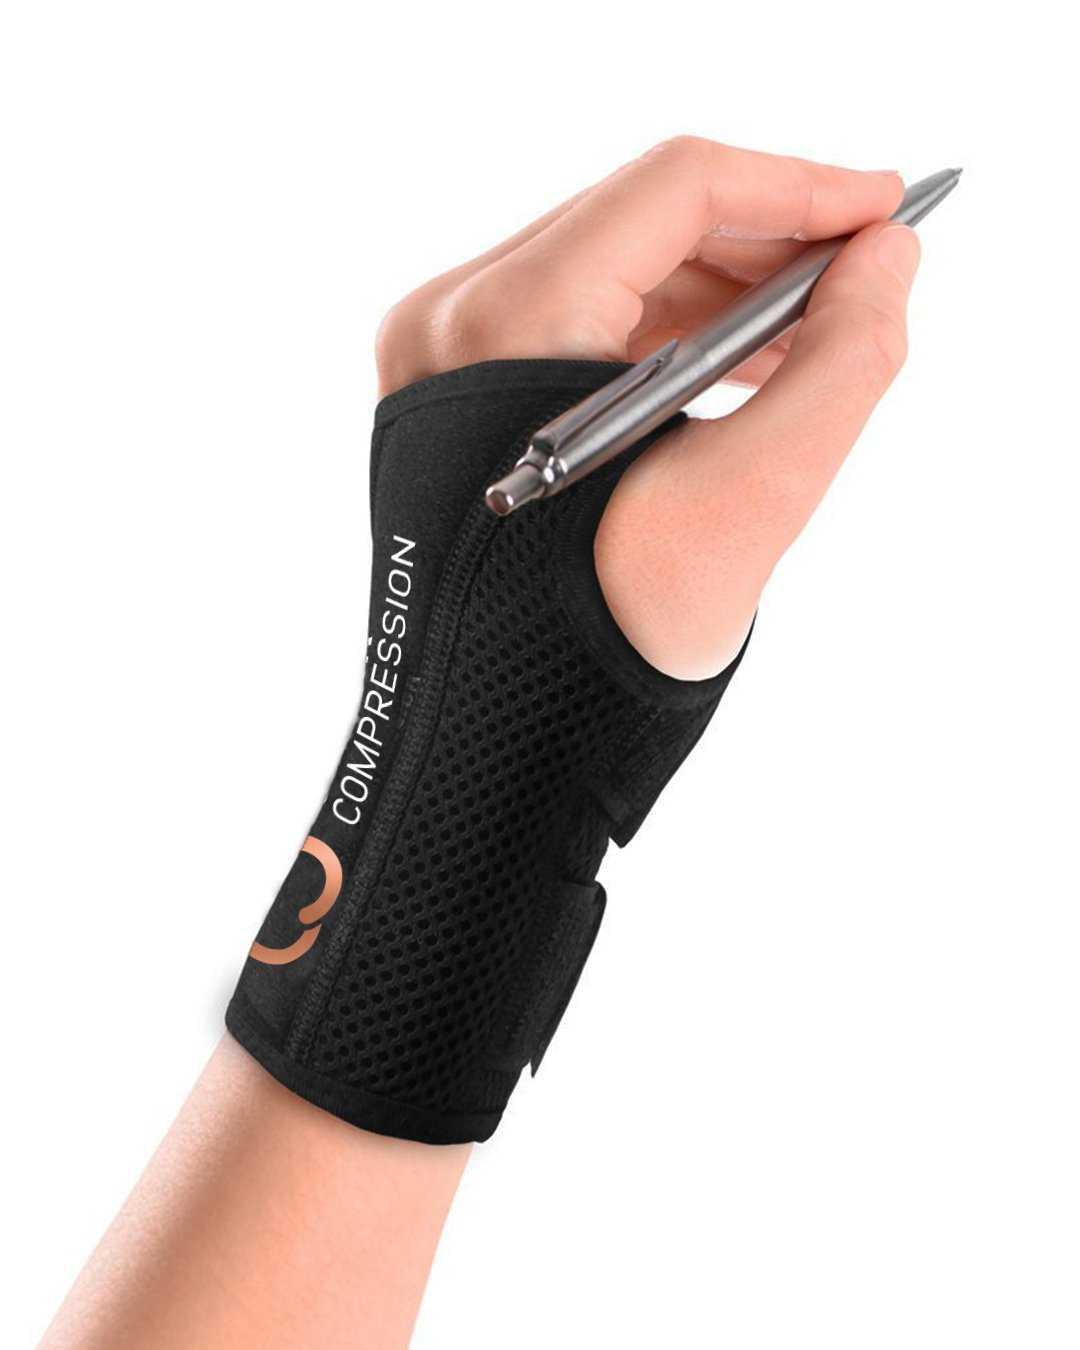 Copper Wrist Support Brace Compression Sleeve Arthritis Carpal Tunnel Hand